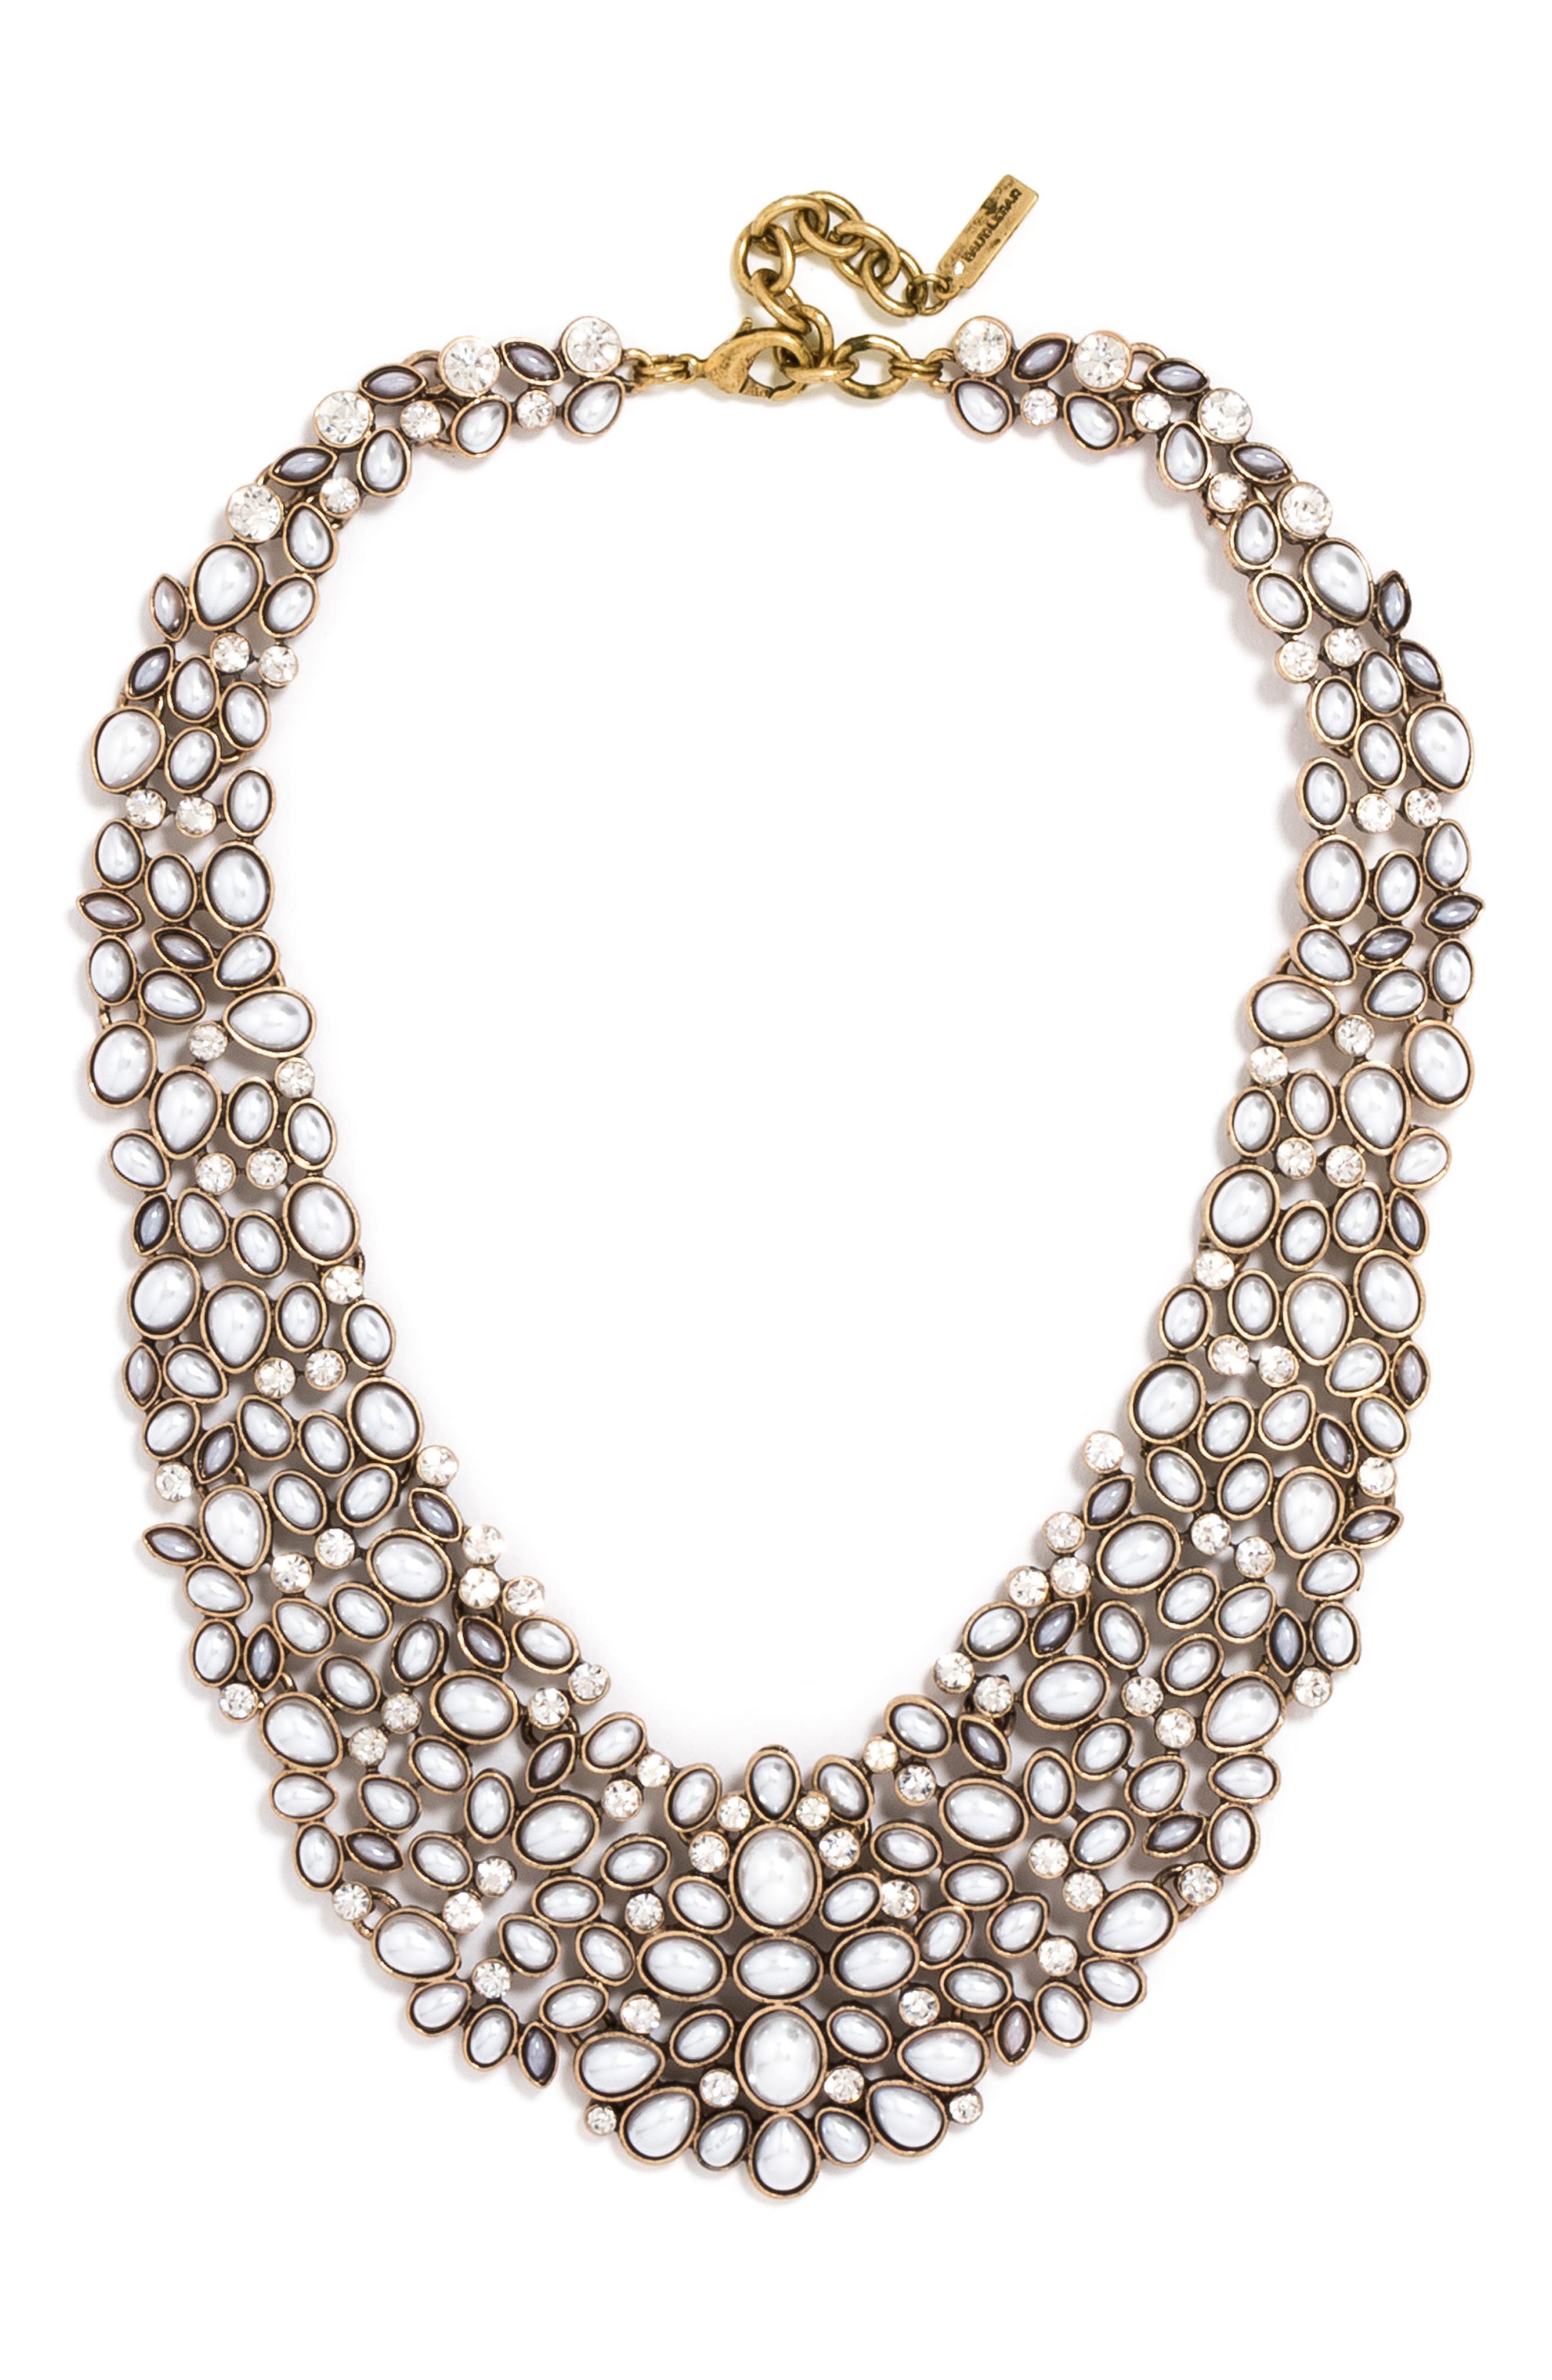 WSHINE Rhinestone Statement Necklace Chunky Necklaces for Women Perdant Choker